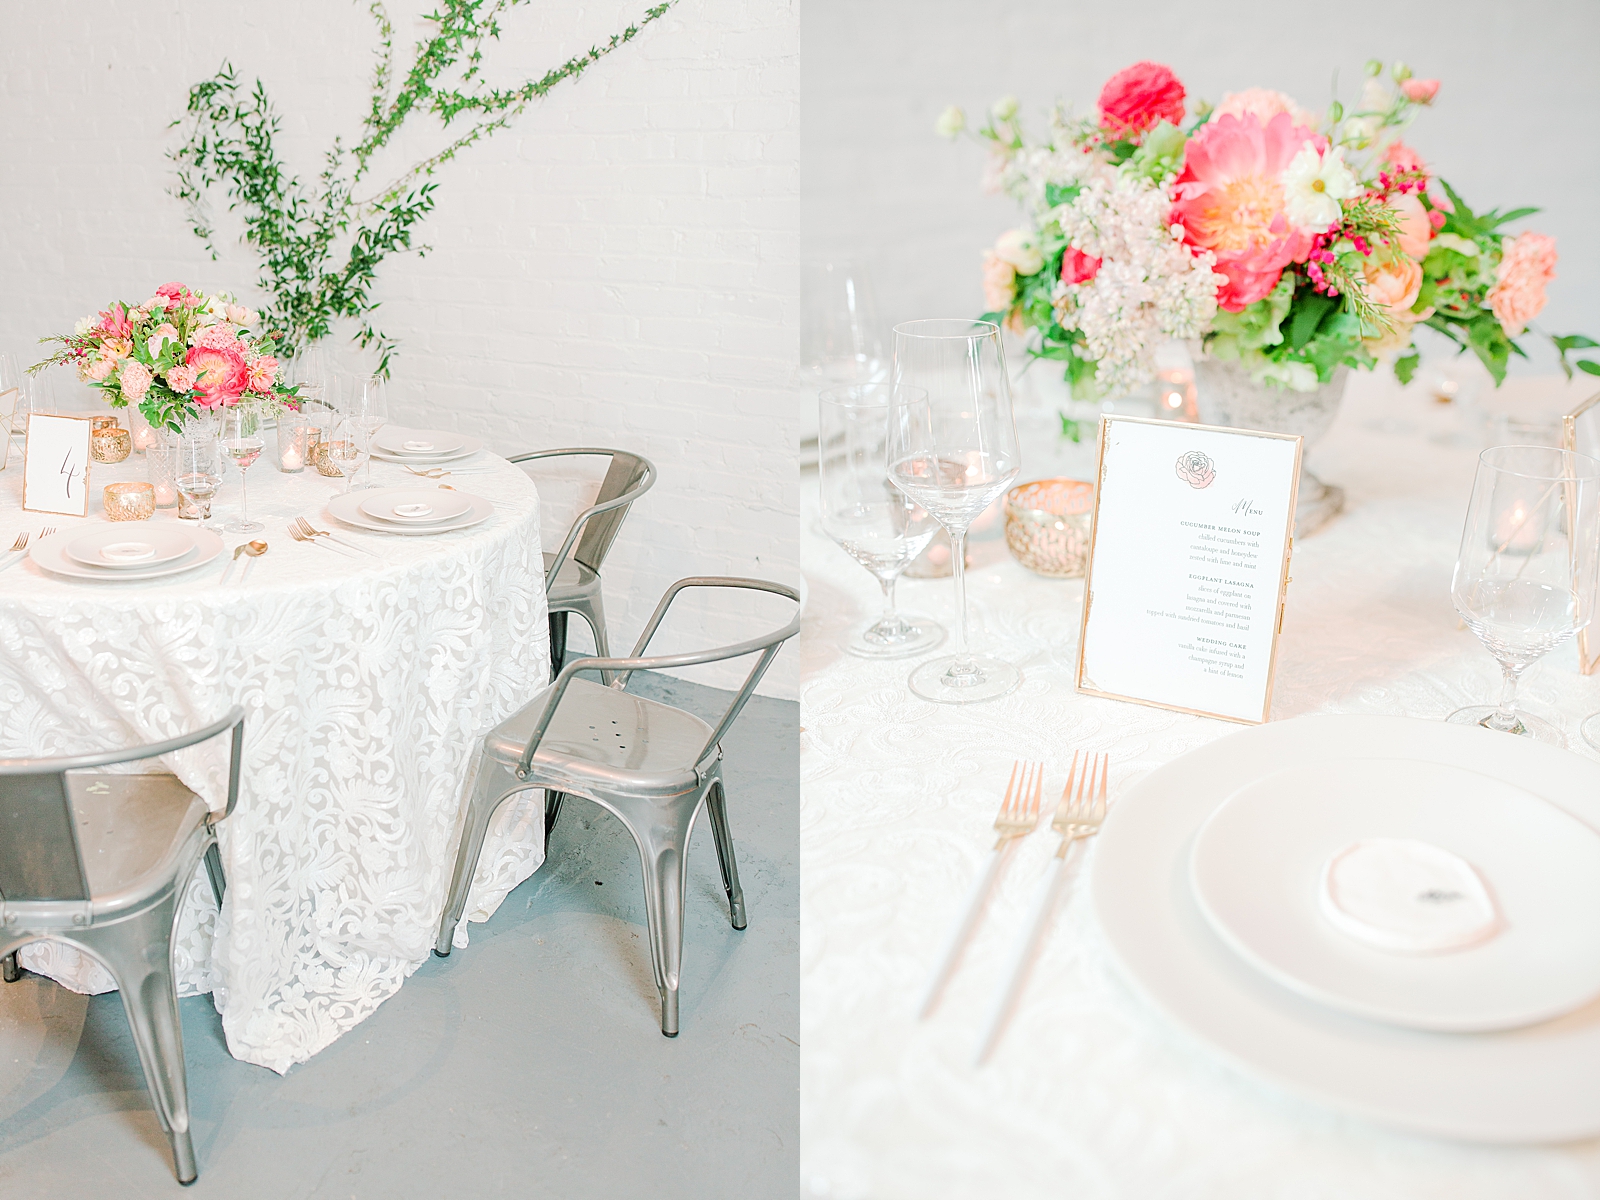 Spring Brickyard Wedding Reception Table Setting Photos